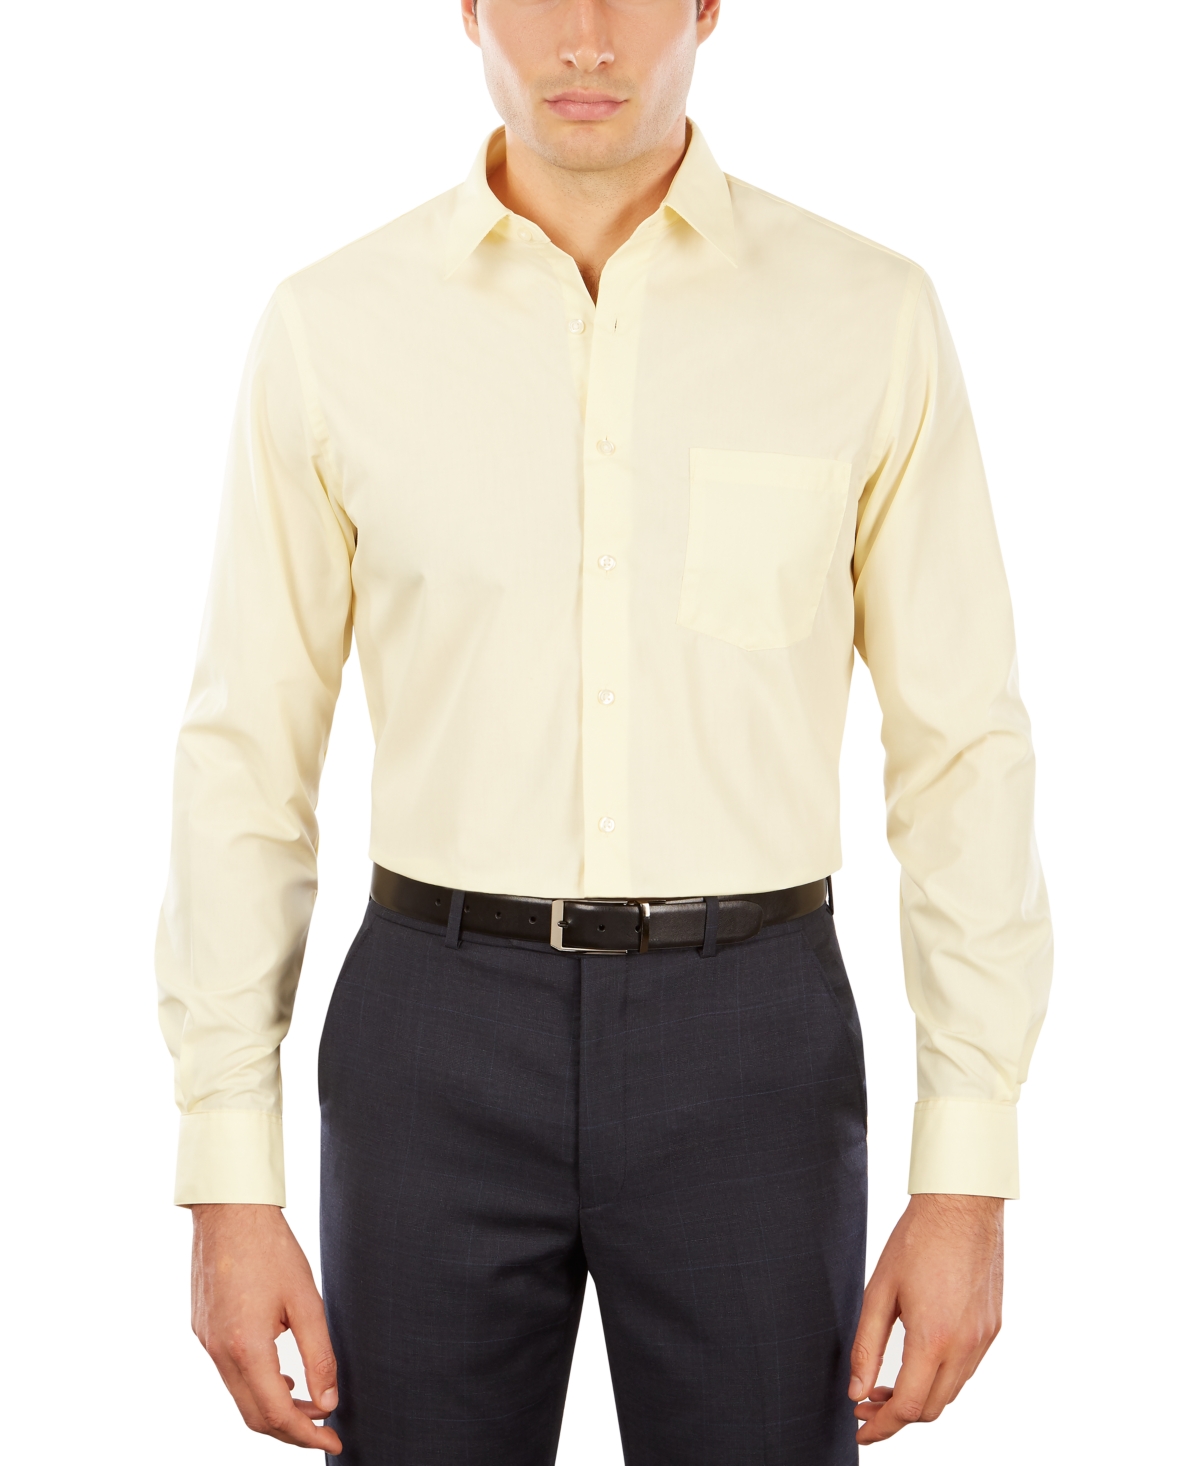 Men's Athletic Fit Poplin Dress Shirt - Lemon Glaze